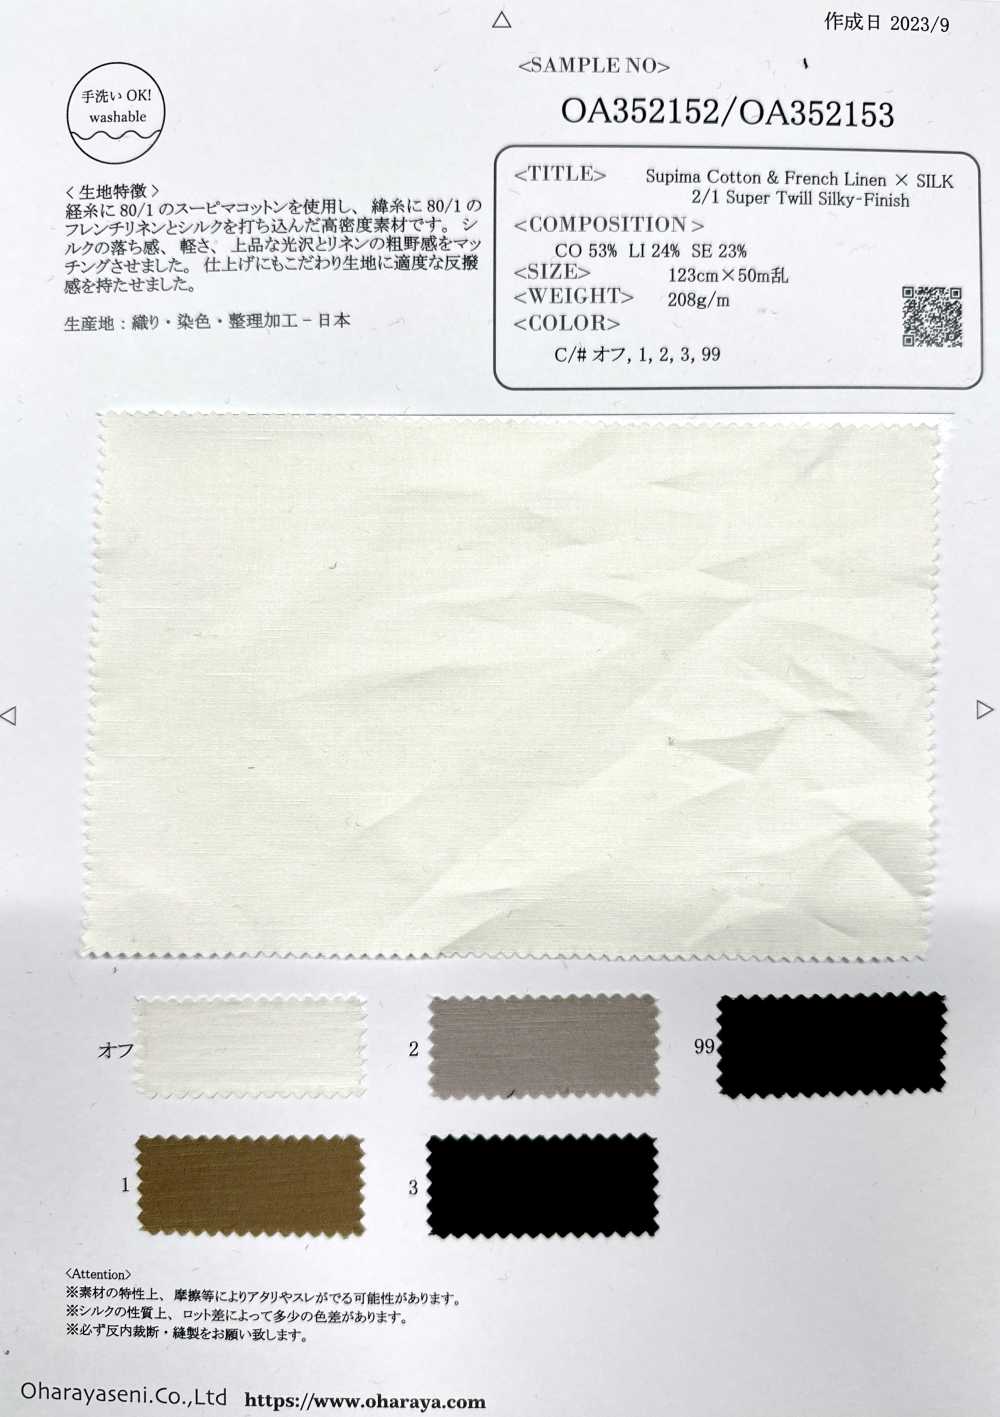 OA352152 Supima Cotton & French Linen × SILK 2/1 Super Twill Silky-Finish[Textile / Fabric] Oharayaseni